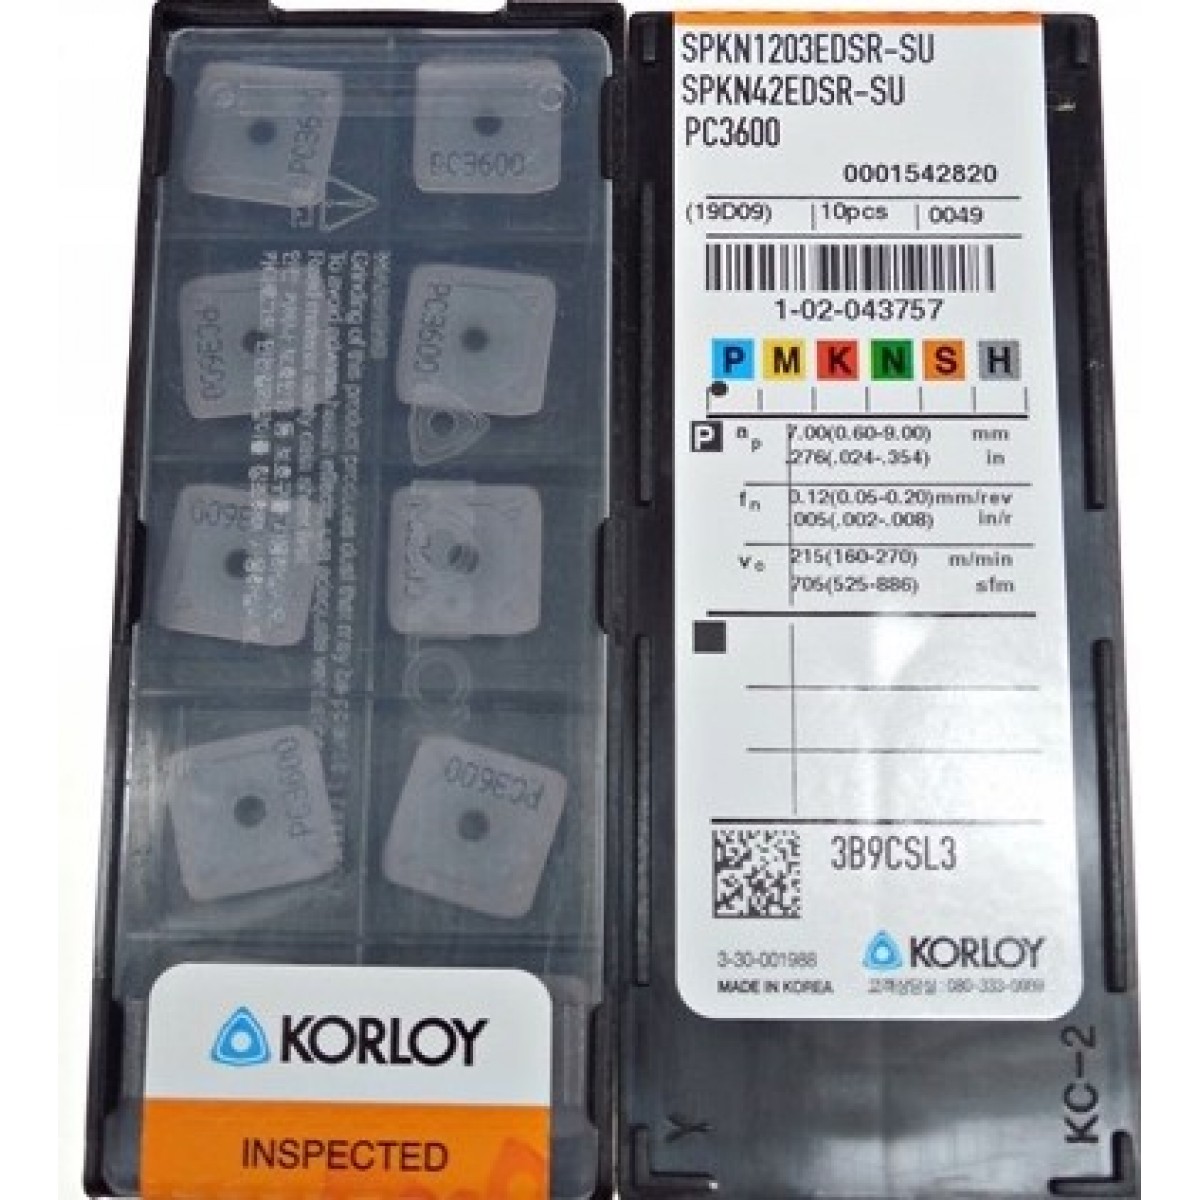 KORLOY - SPKN1203EDSR-SU PC3600